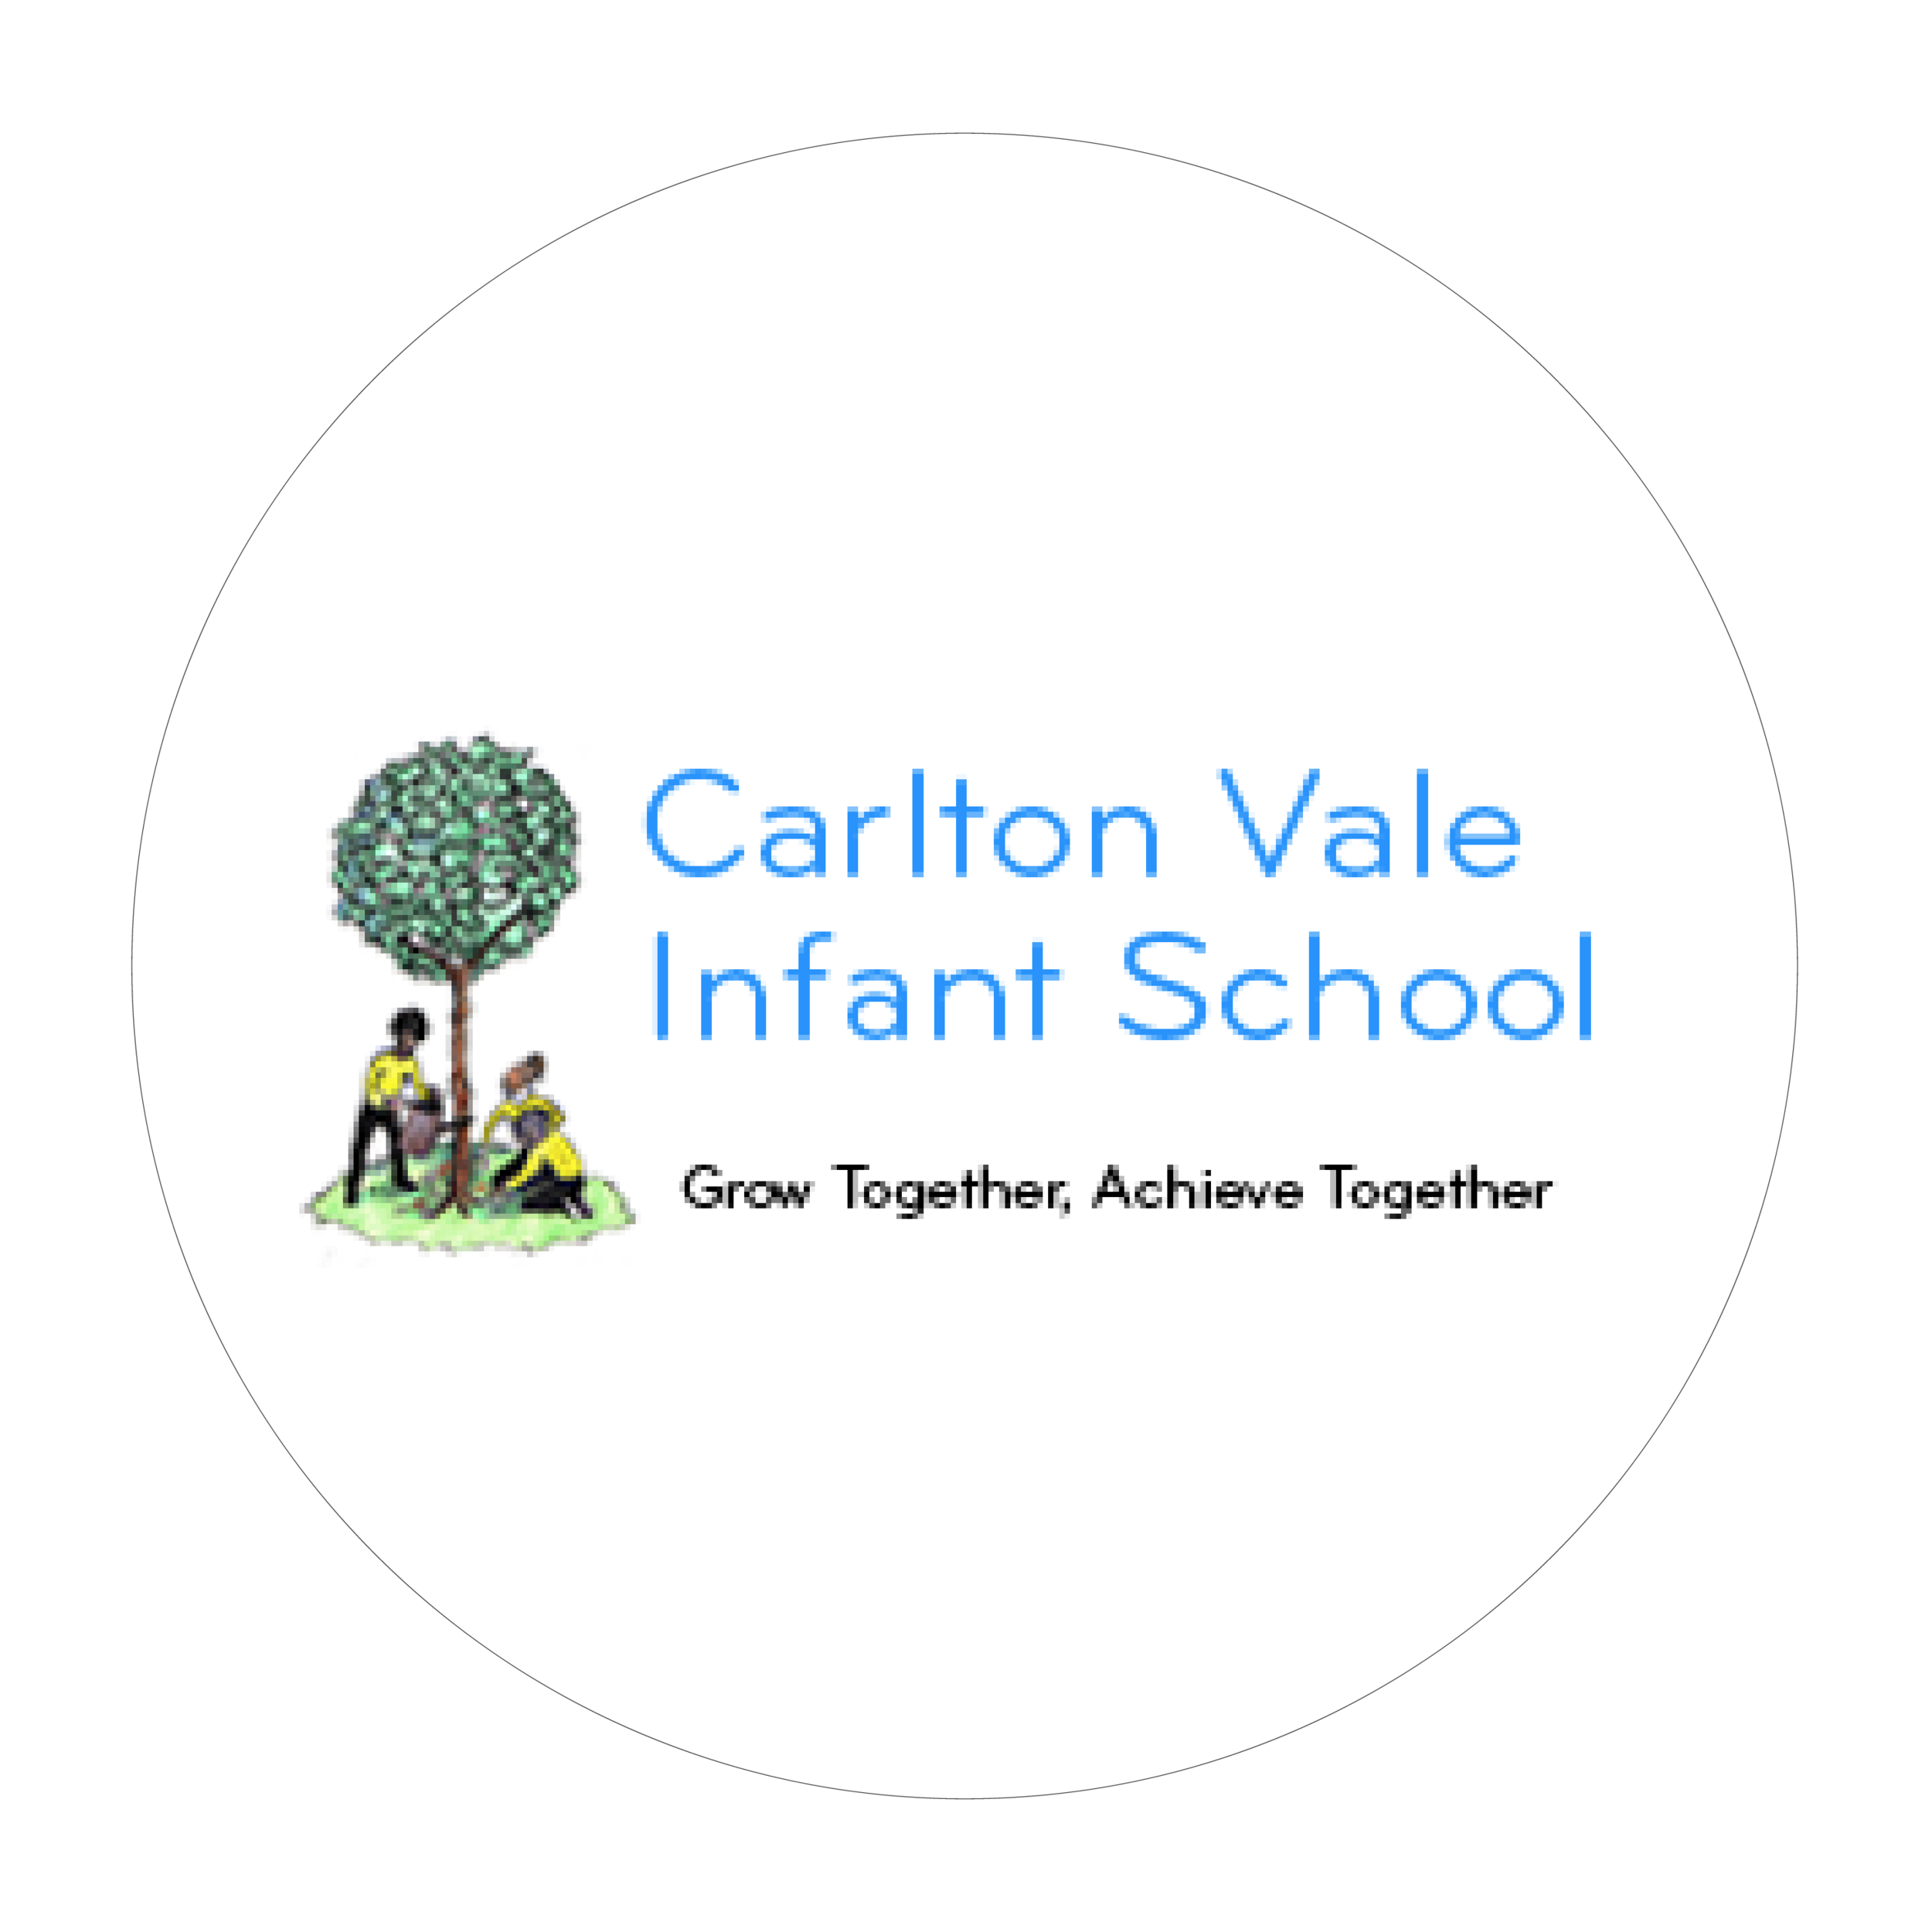 Carlton Vale Infant School